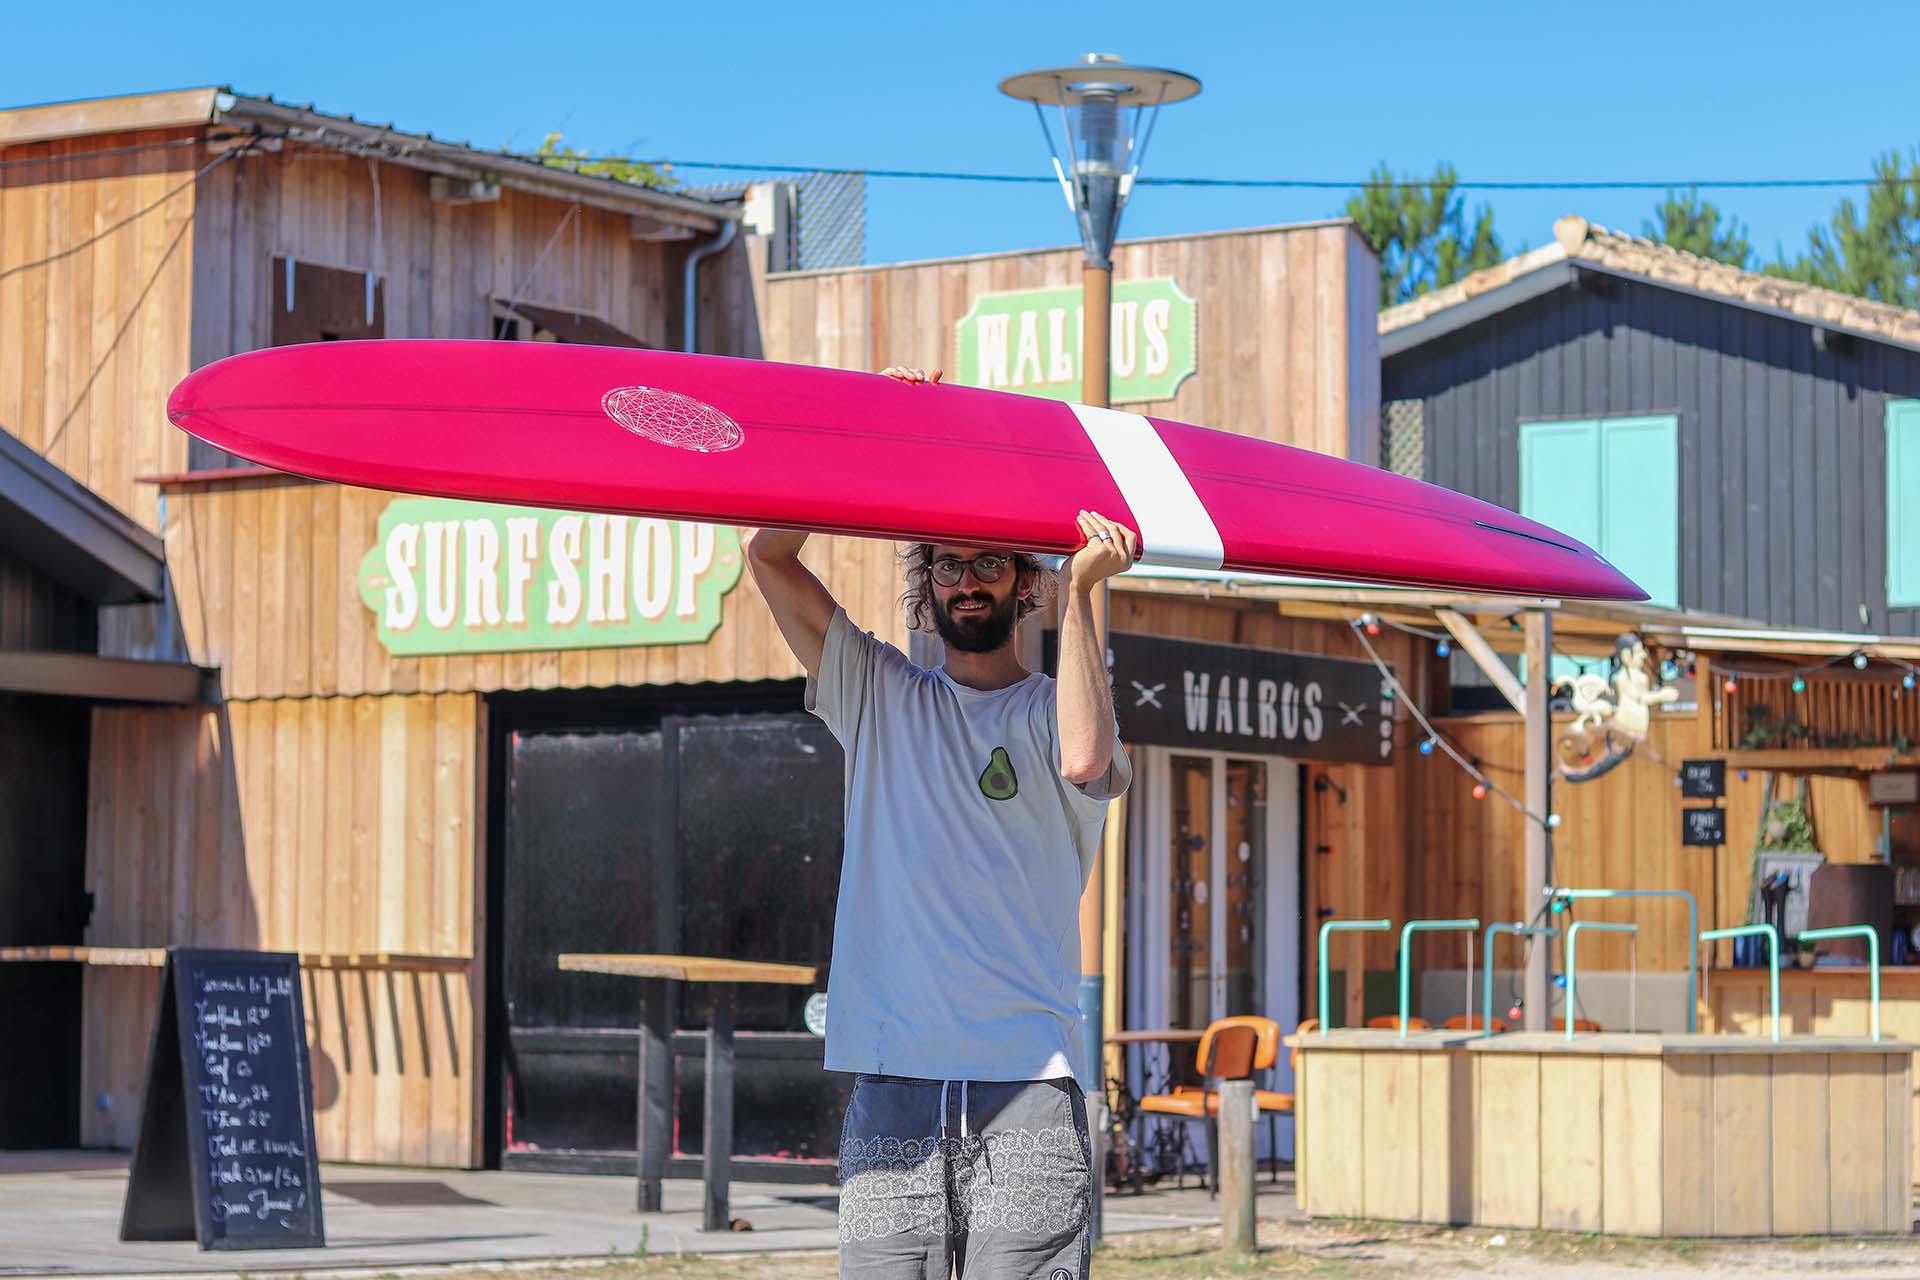 Walrus Surf Shop 2019